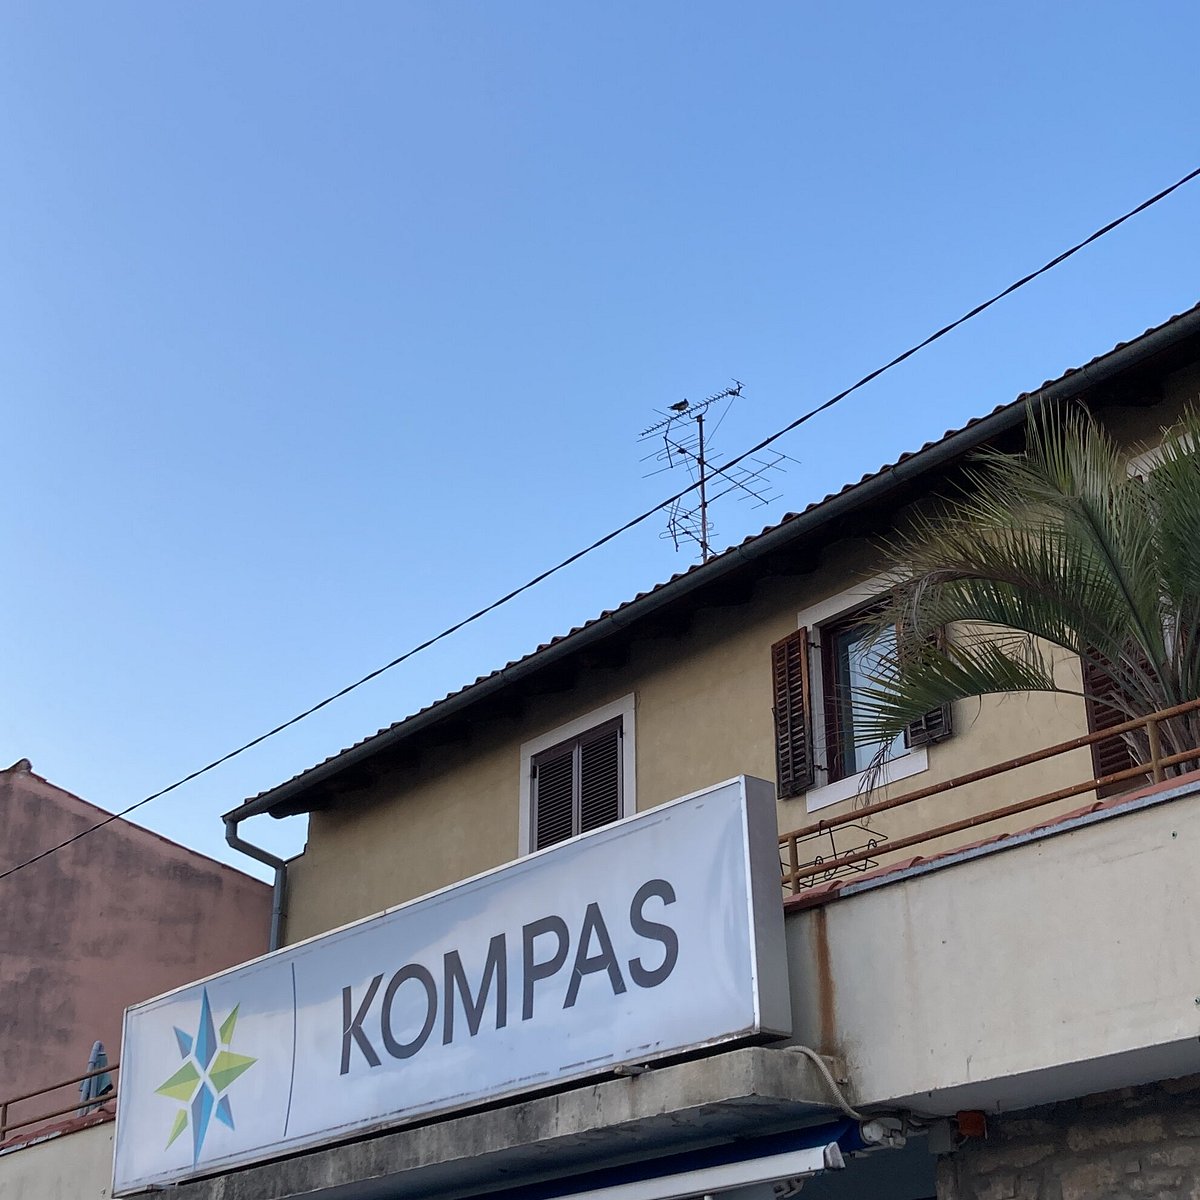 kompas travel agency slovenia